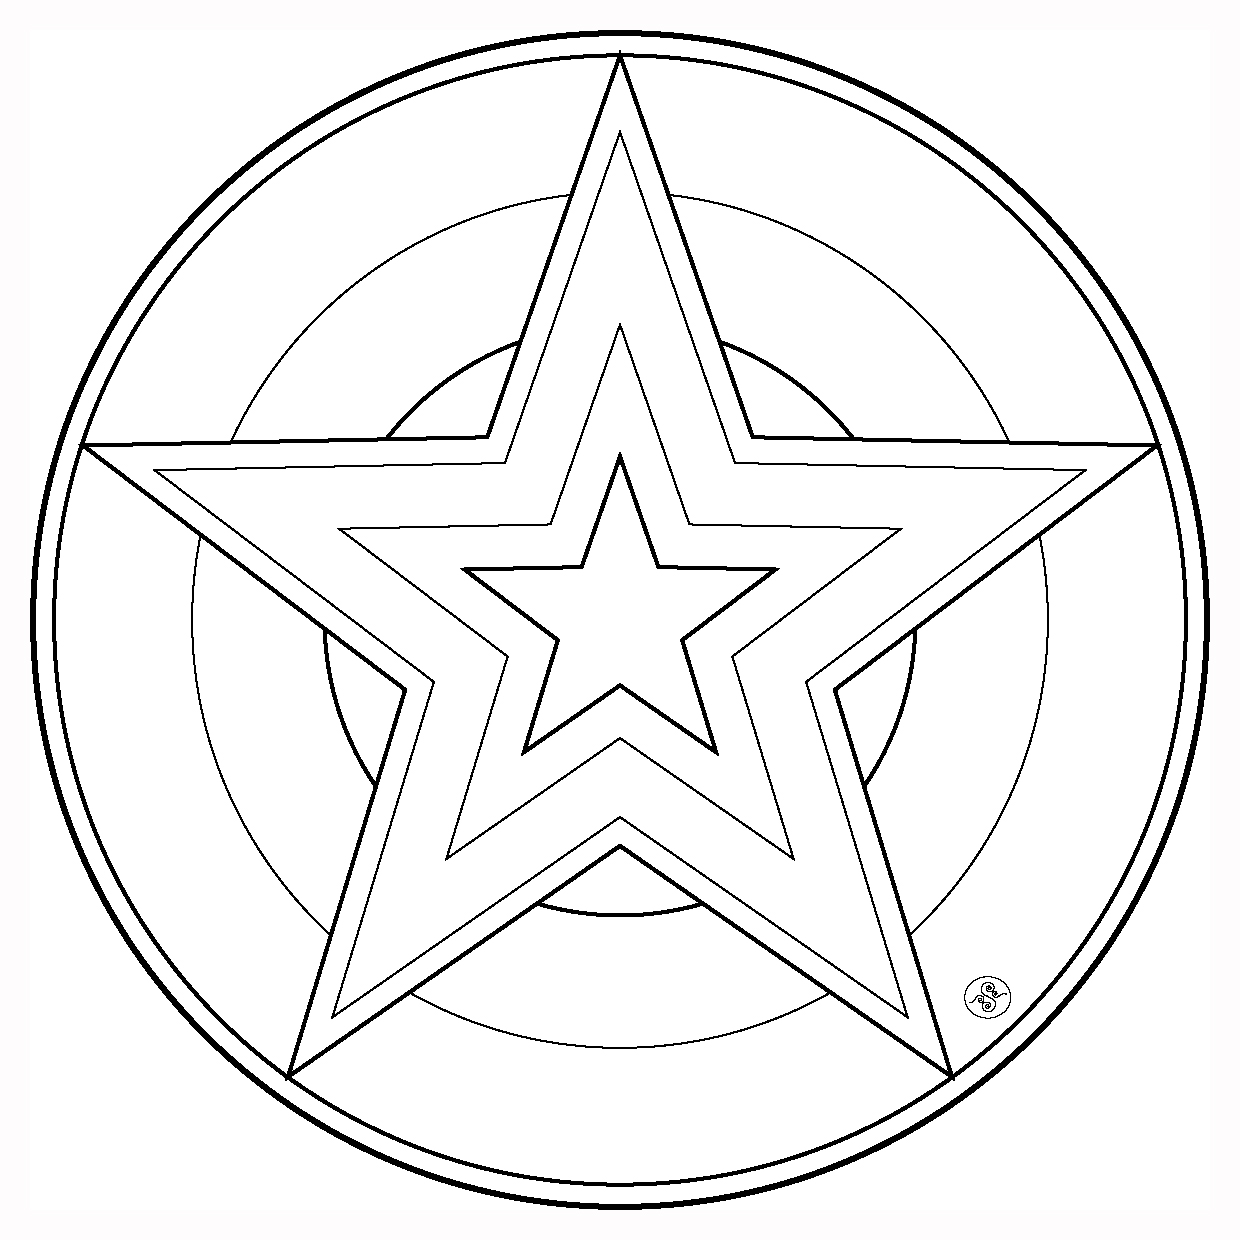 Download Star Mandalas (Mandalas) - Printable coloring pages